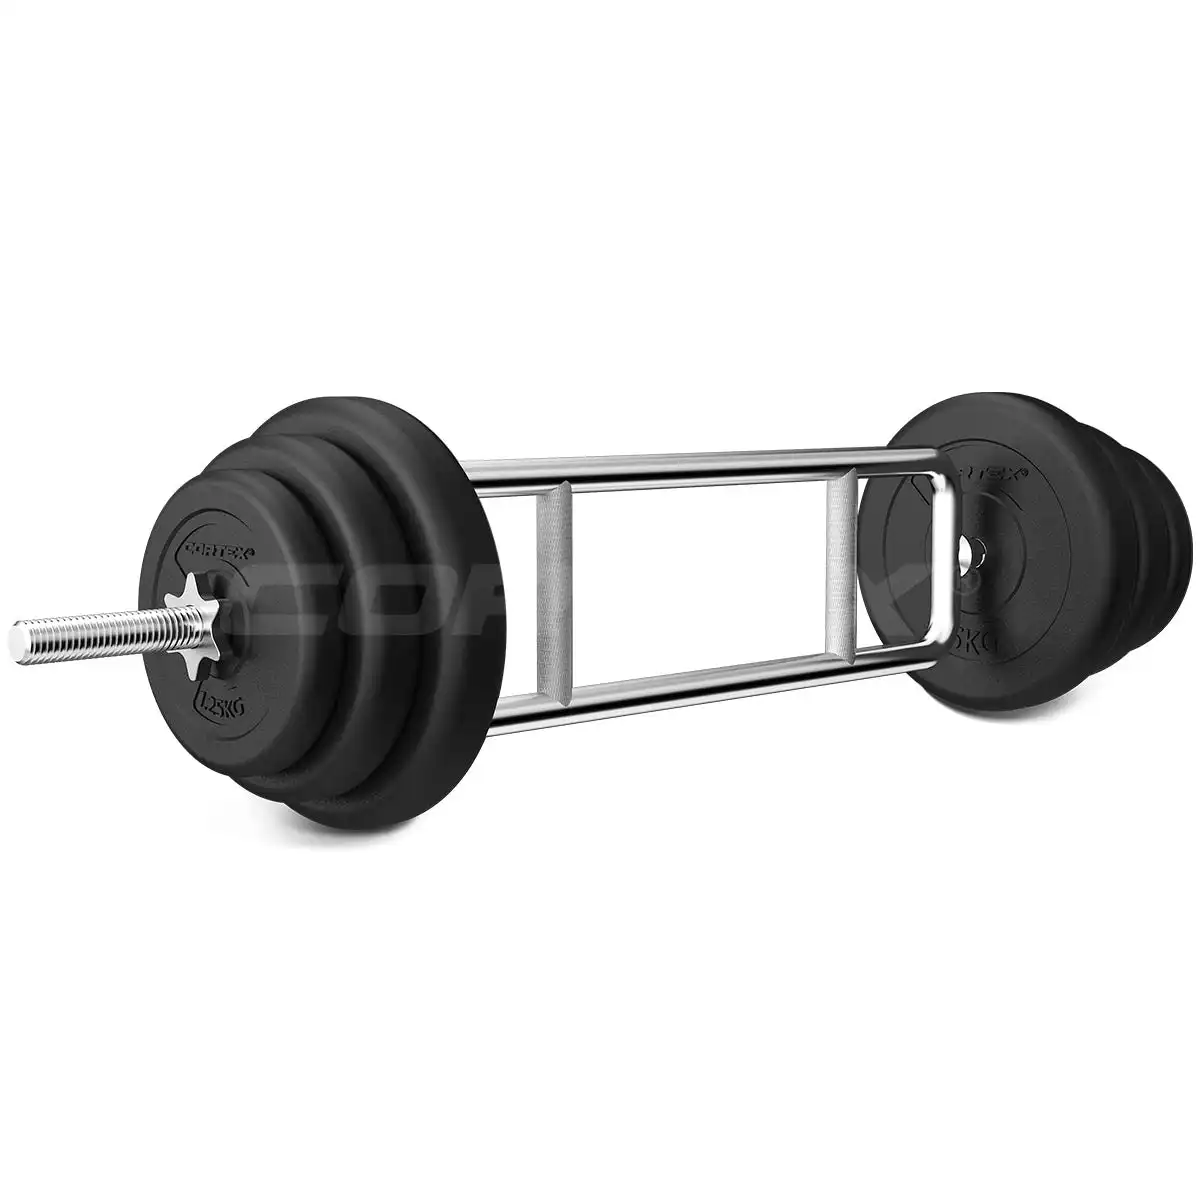 Cortex 40kg EnduraCast Tri Bar Weight Set